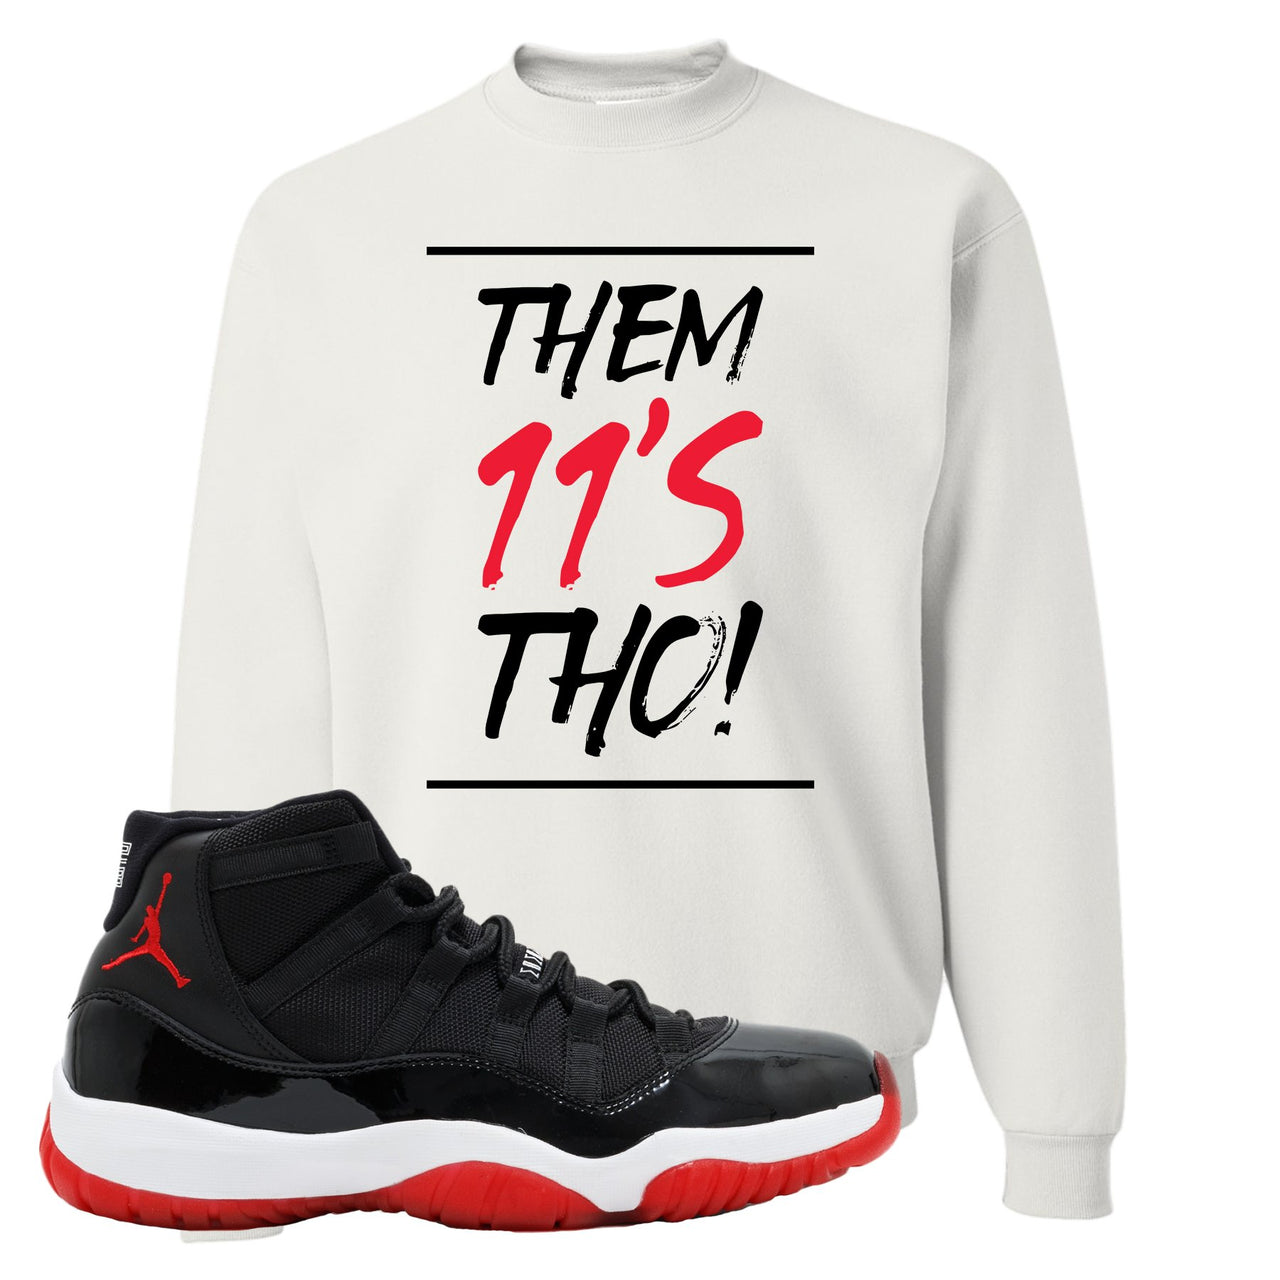 Jordan 11 Bred Them 11s Tho! White Sneaker Hook Up Crewneck Sweatshirt